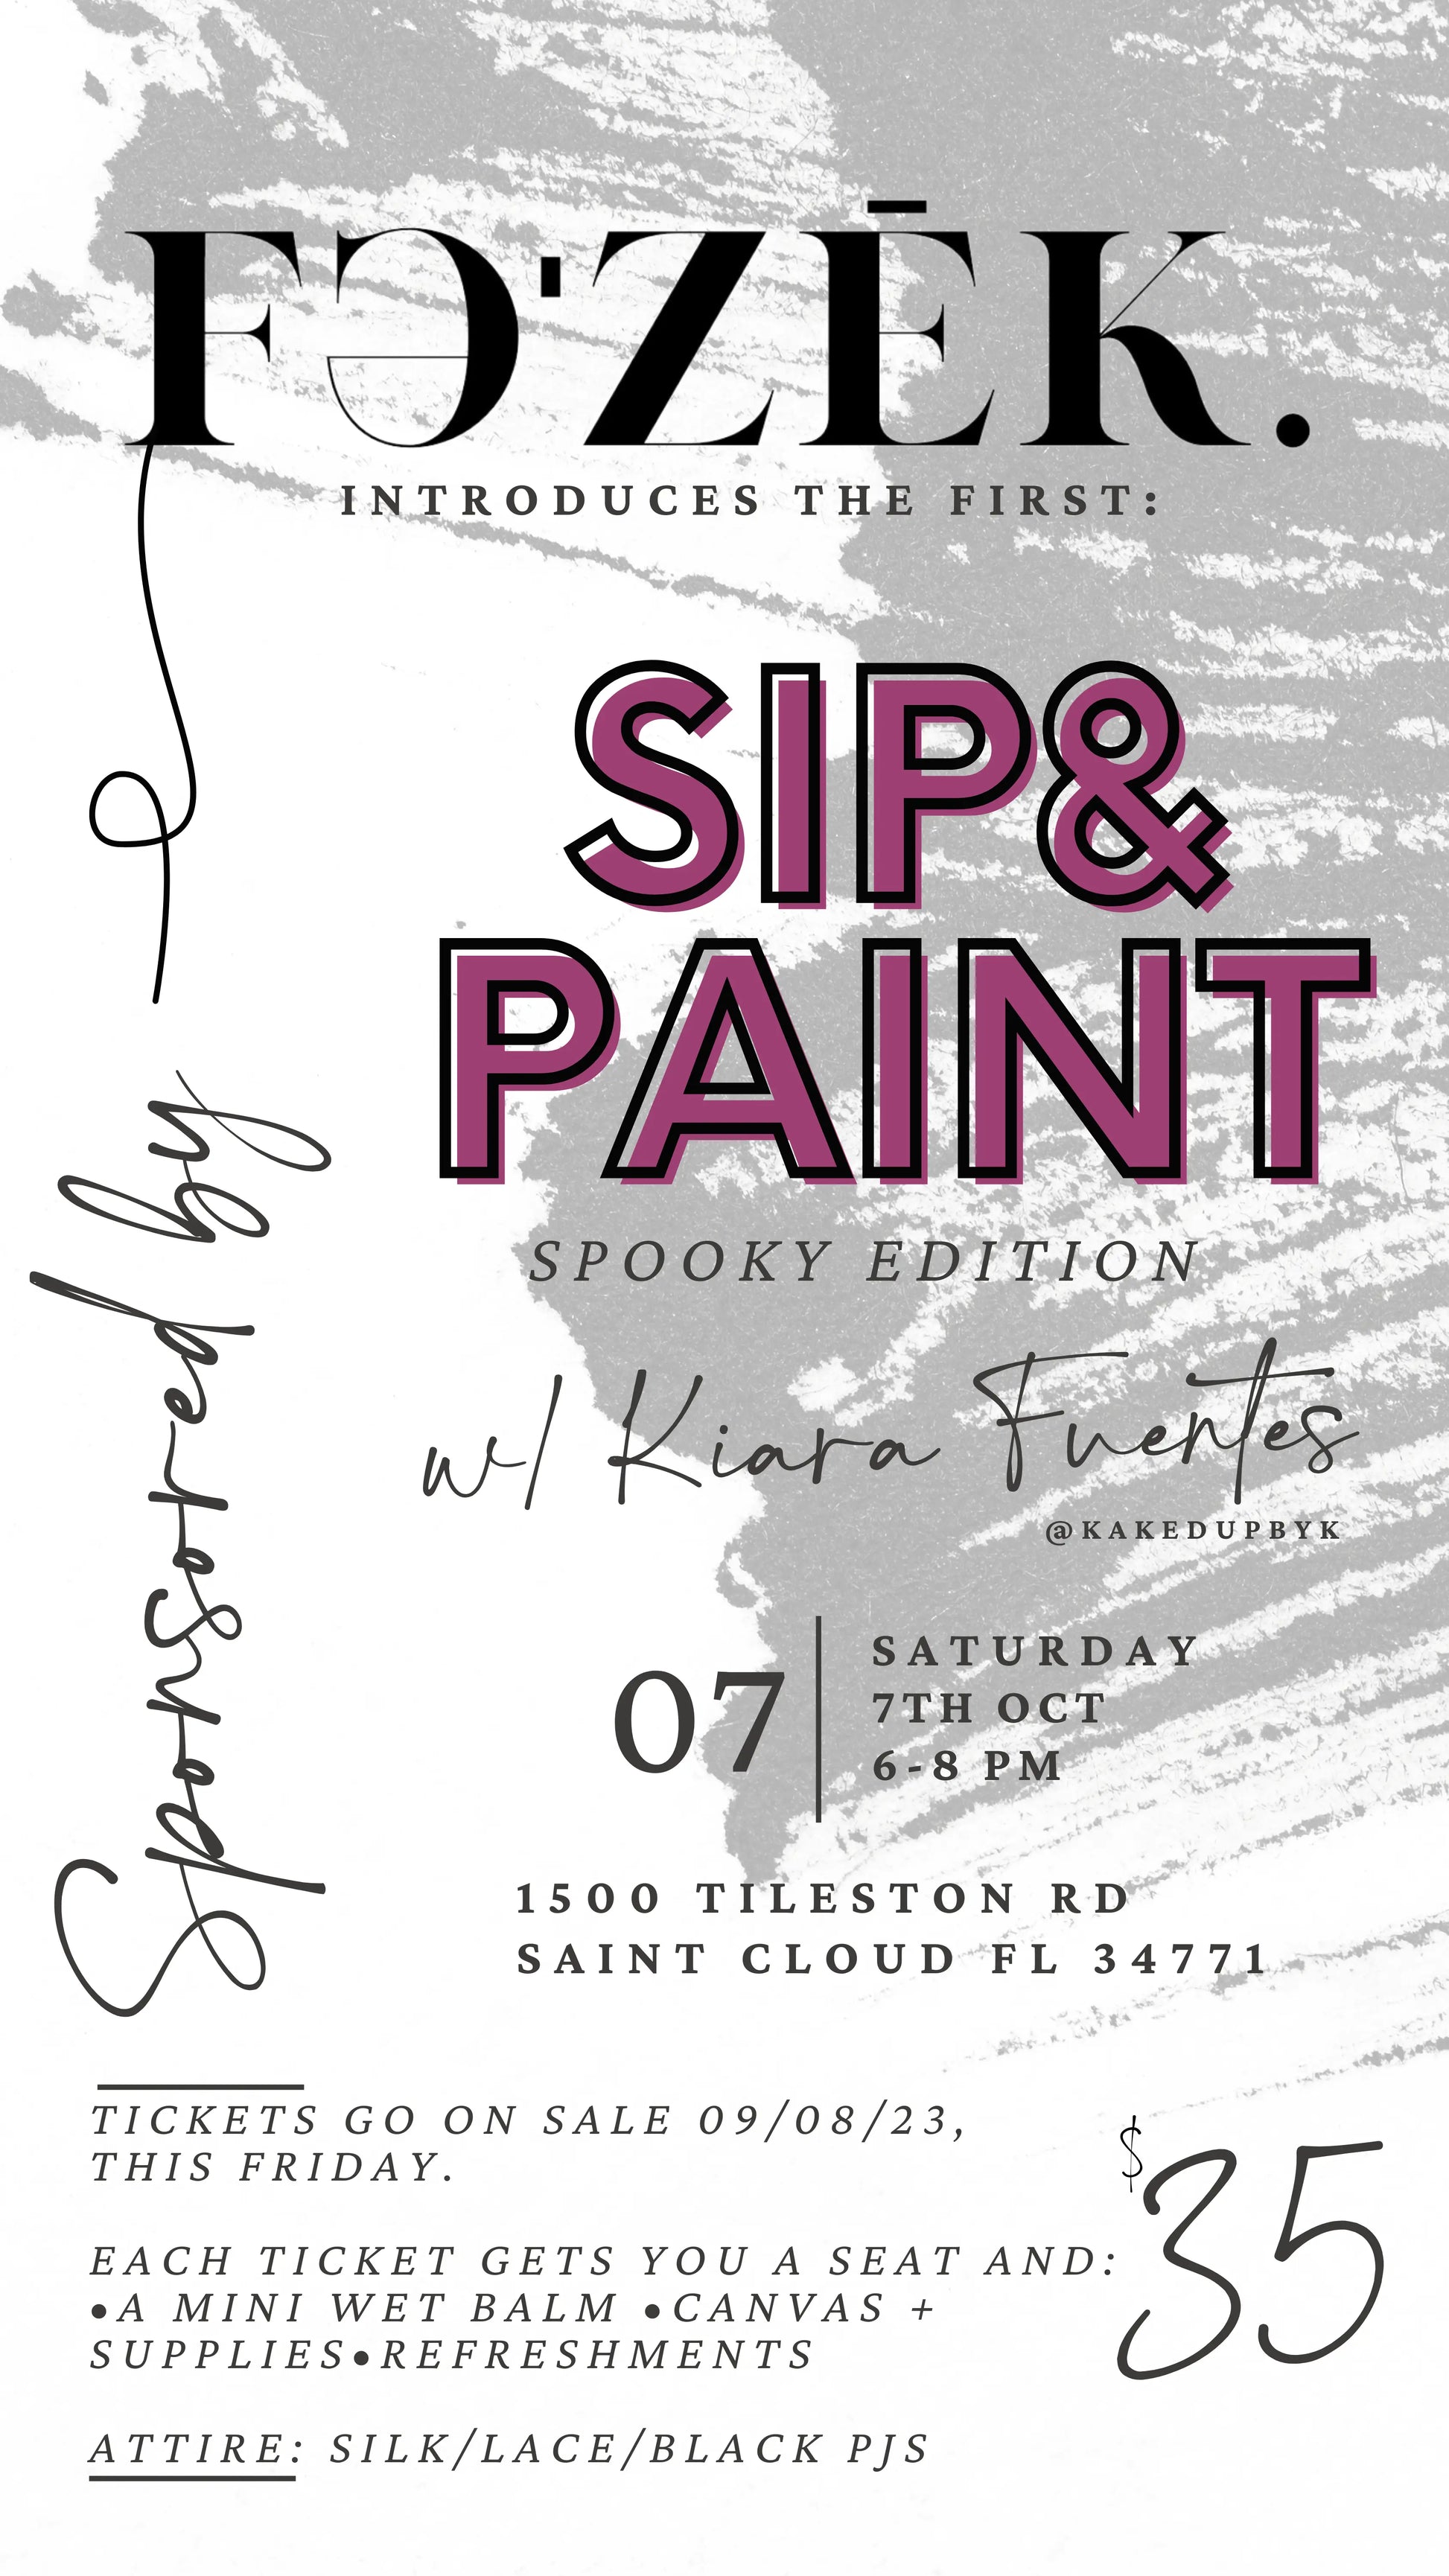 FEZEK-Sponsored Art Party – Sip N Paint Seat Available